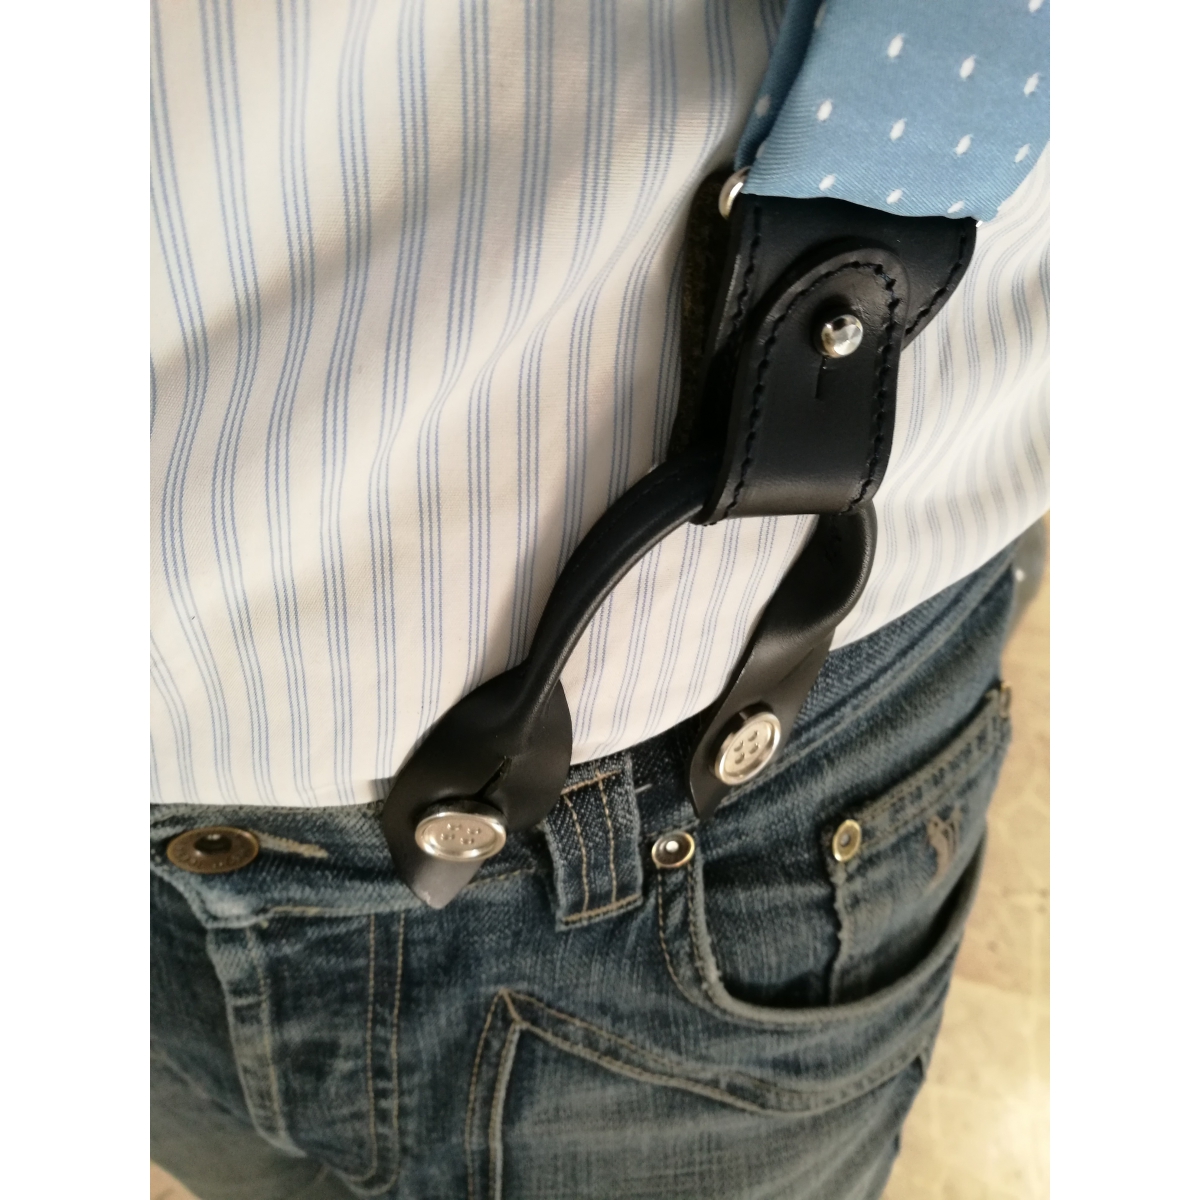 Clip on suspender buttons, vintage